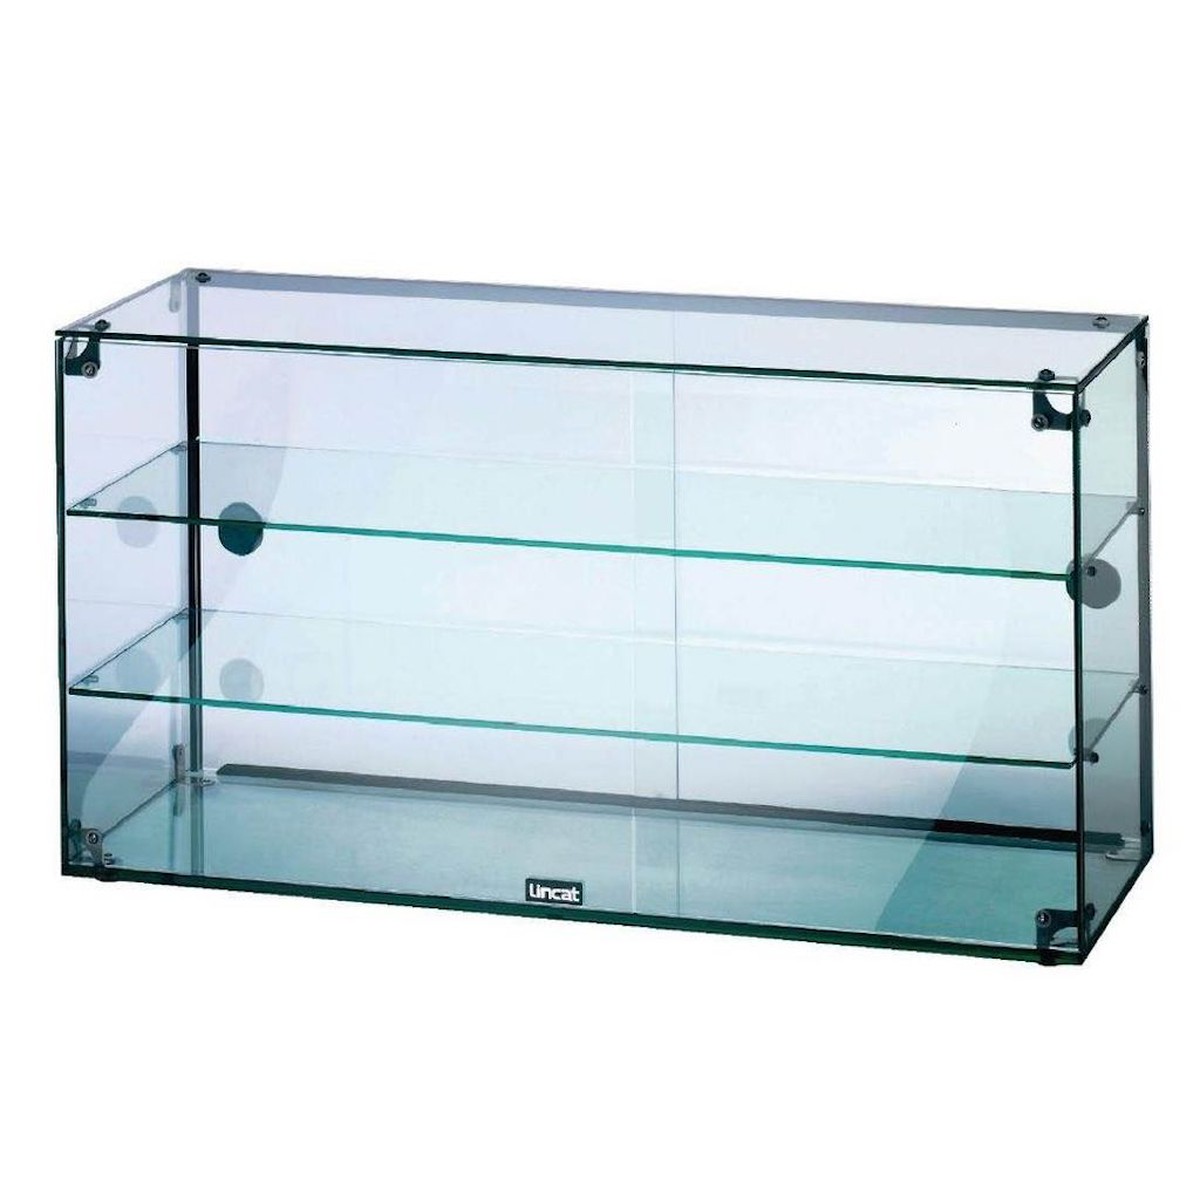 Lincat glass display cabinets